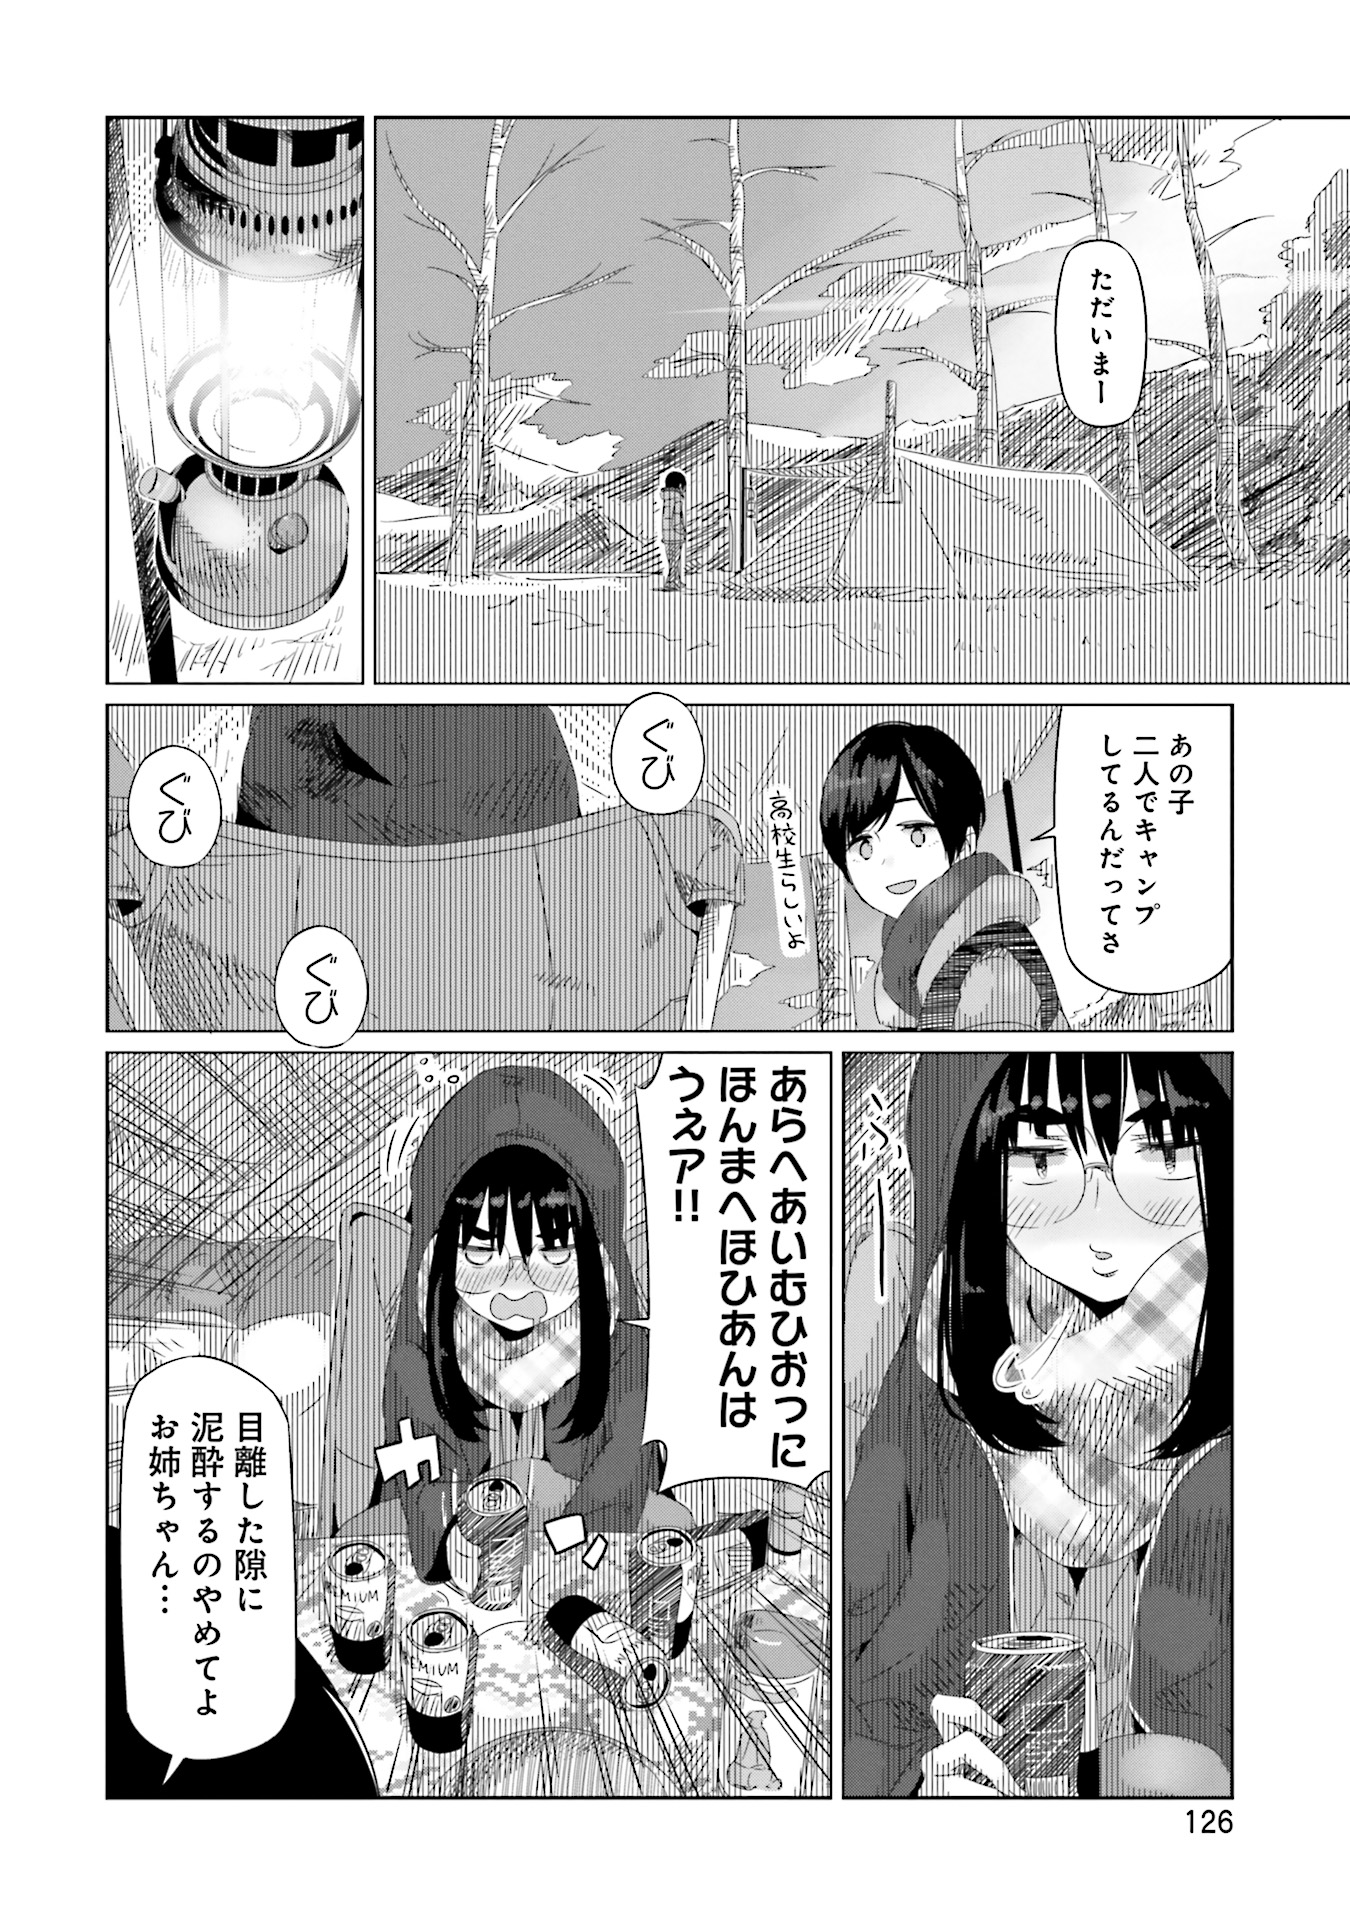 Yuru Camp - Chapter 12 - Page 1